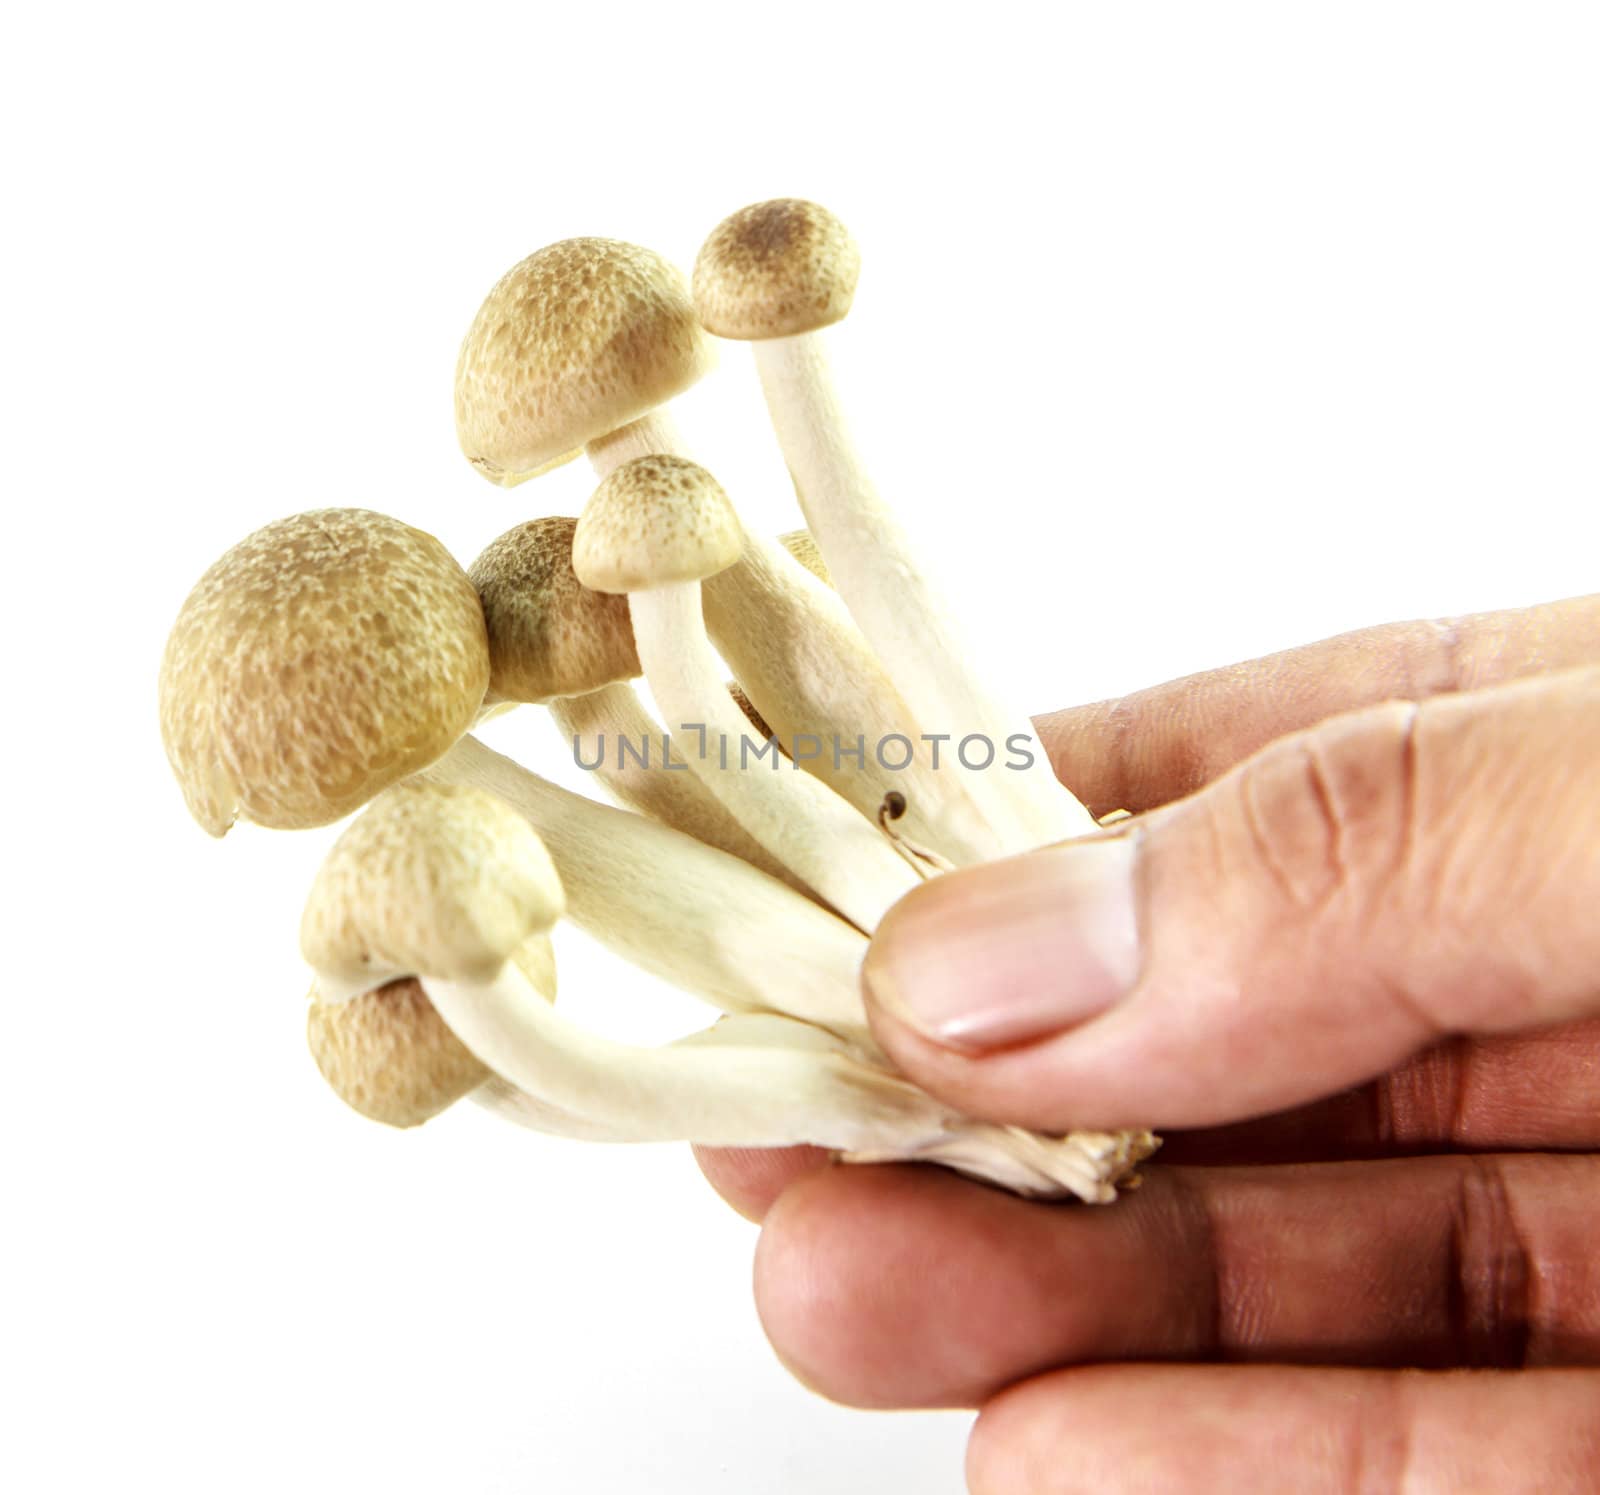 Mushroom with hand by bunwit